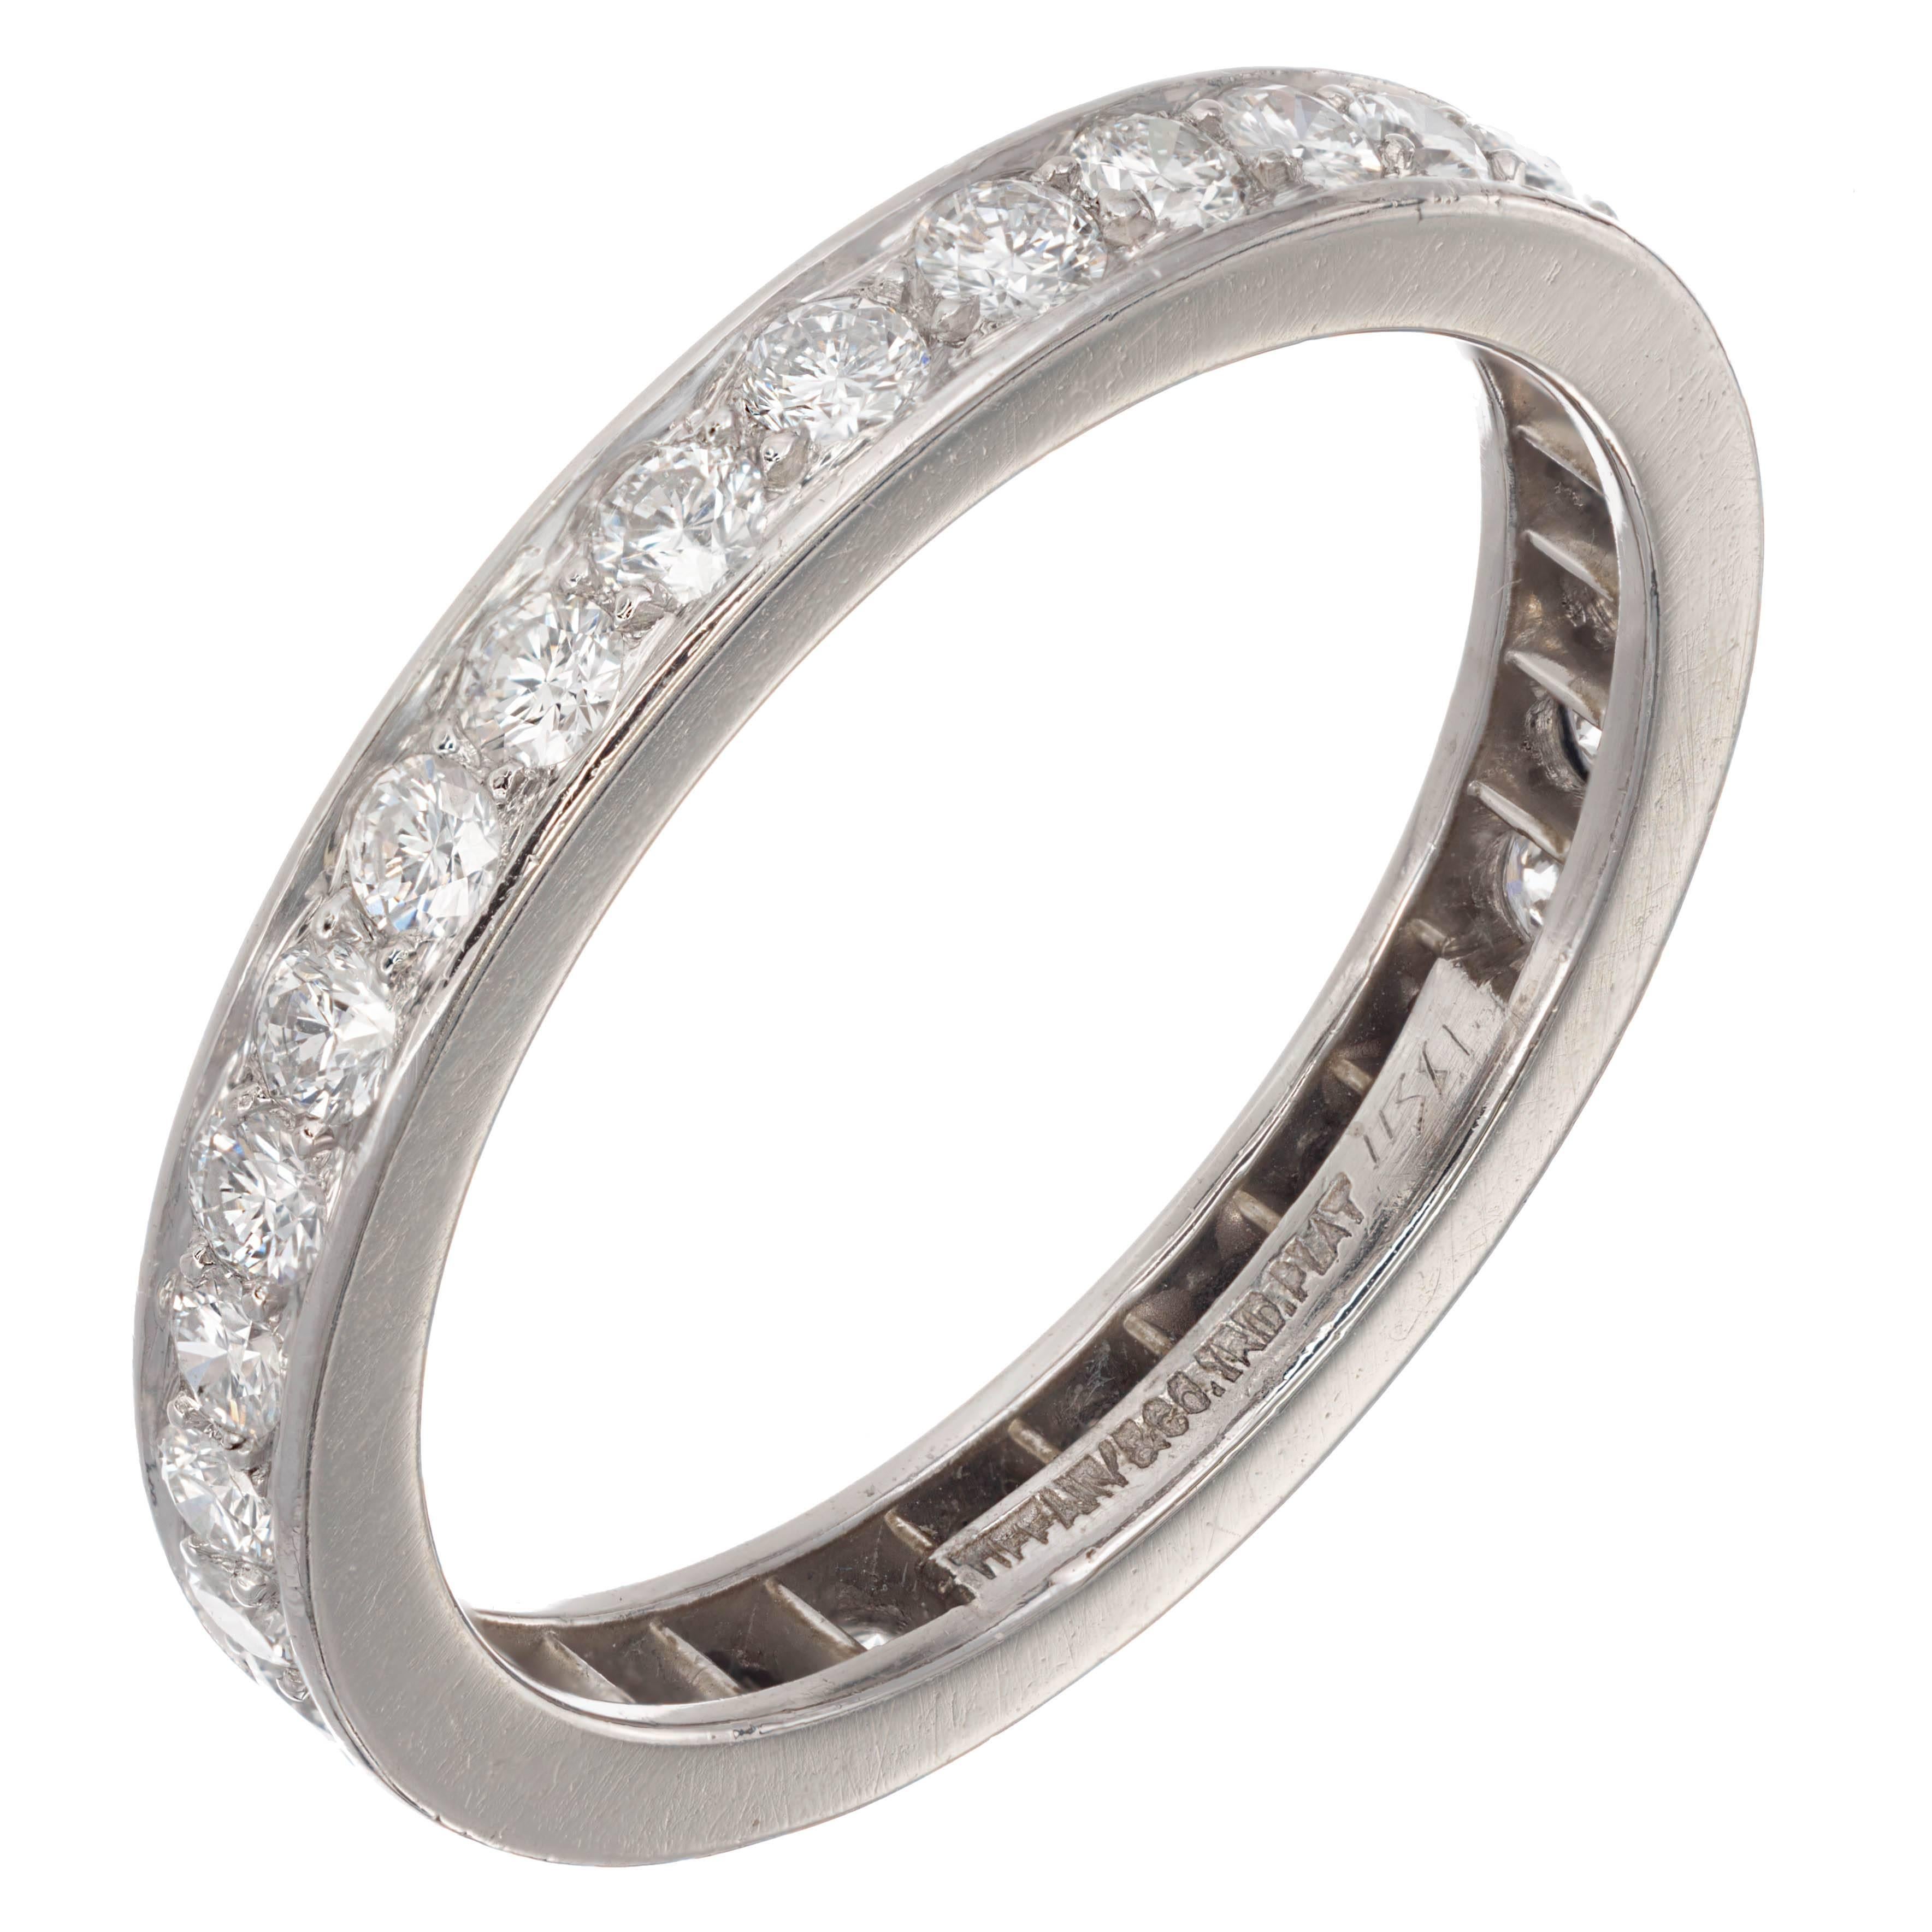 Tiffany & Co. Legacy Bead Set Diamond Platinum Eternity Wedding Band Ring